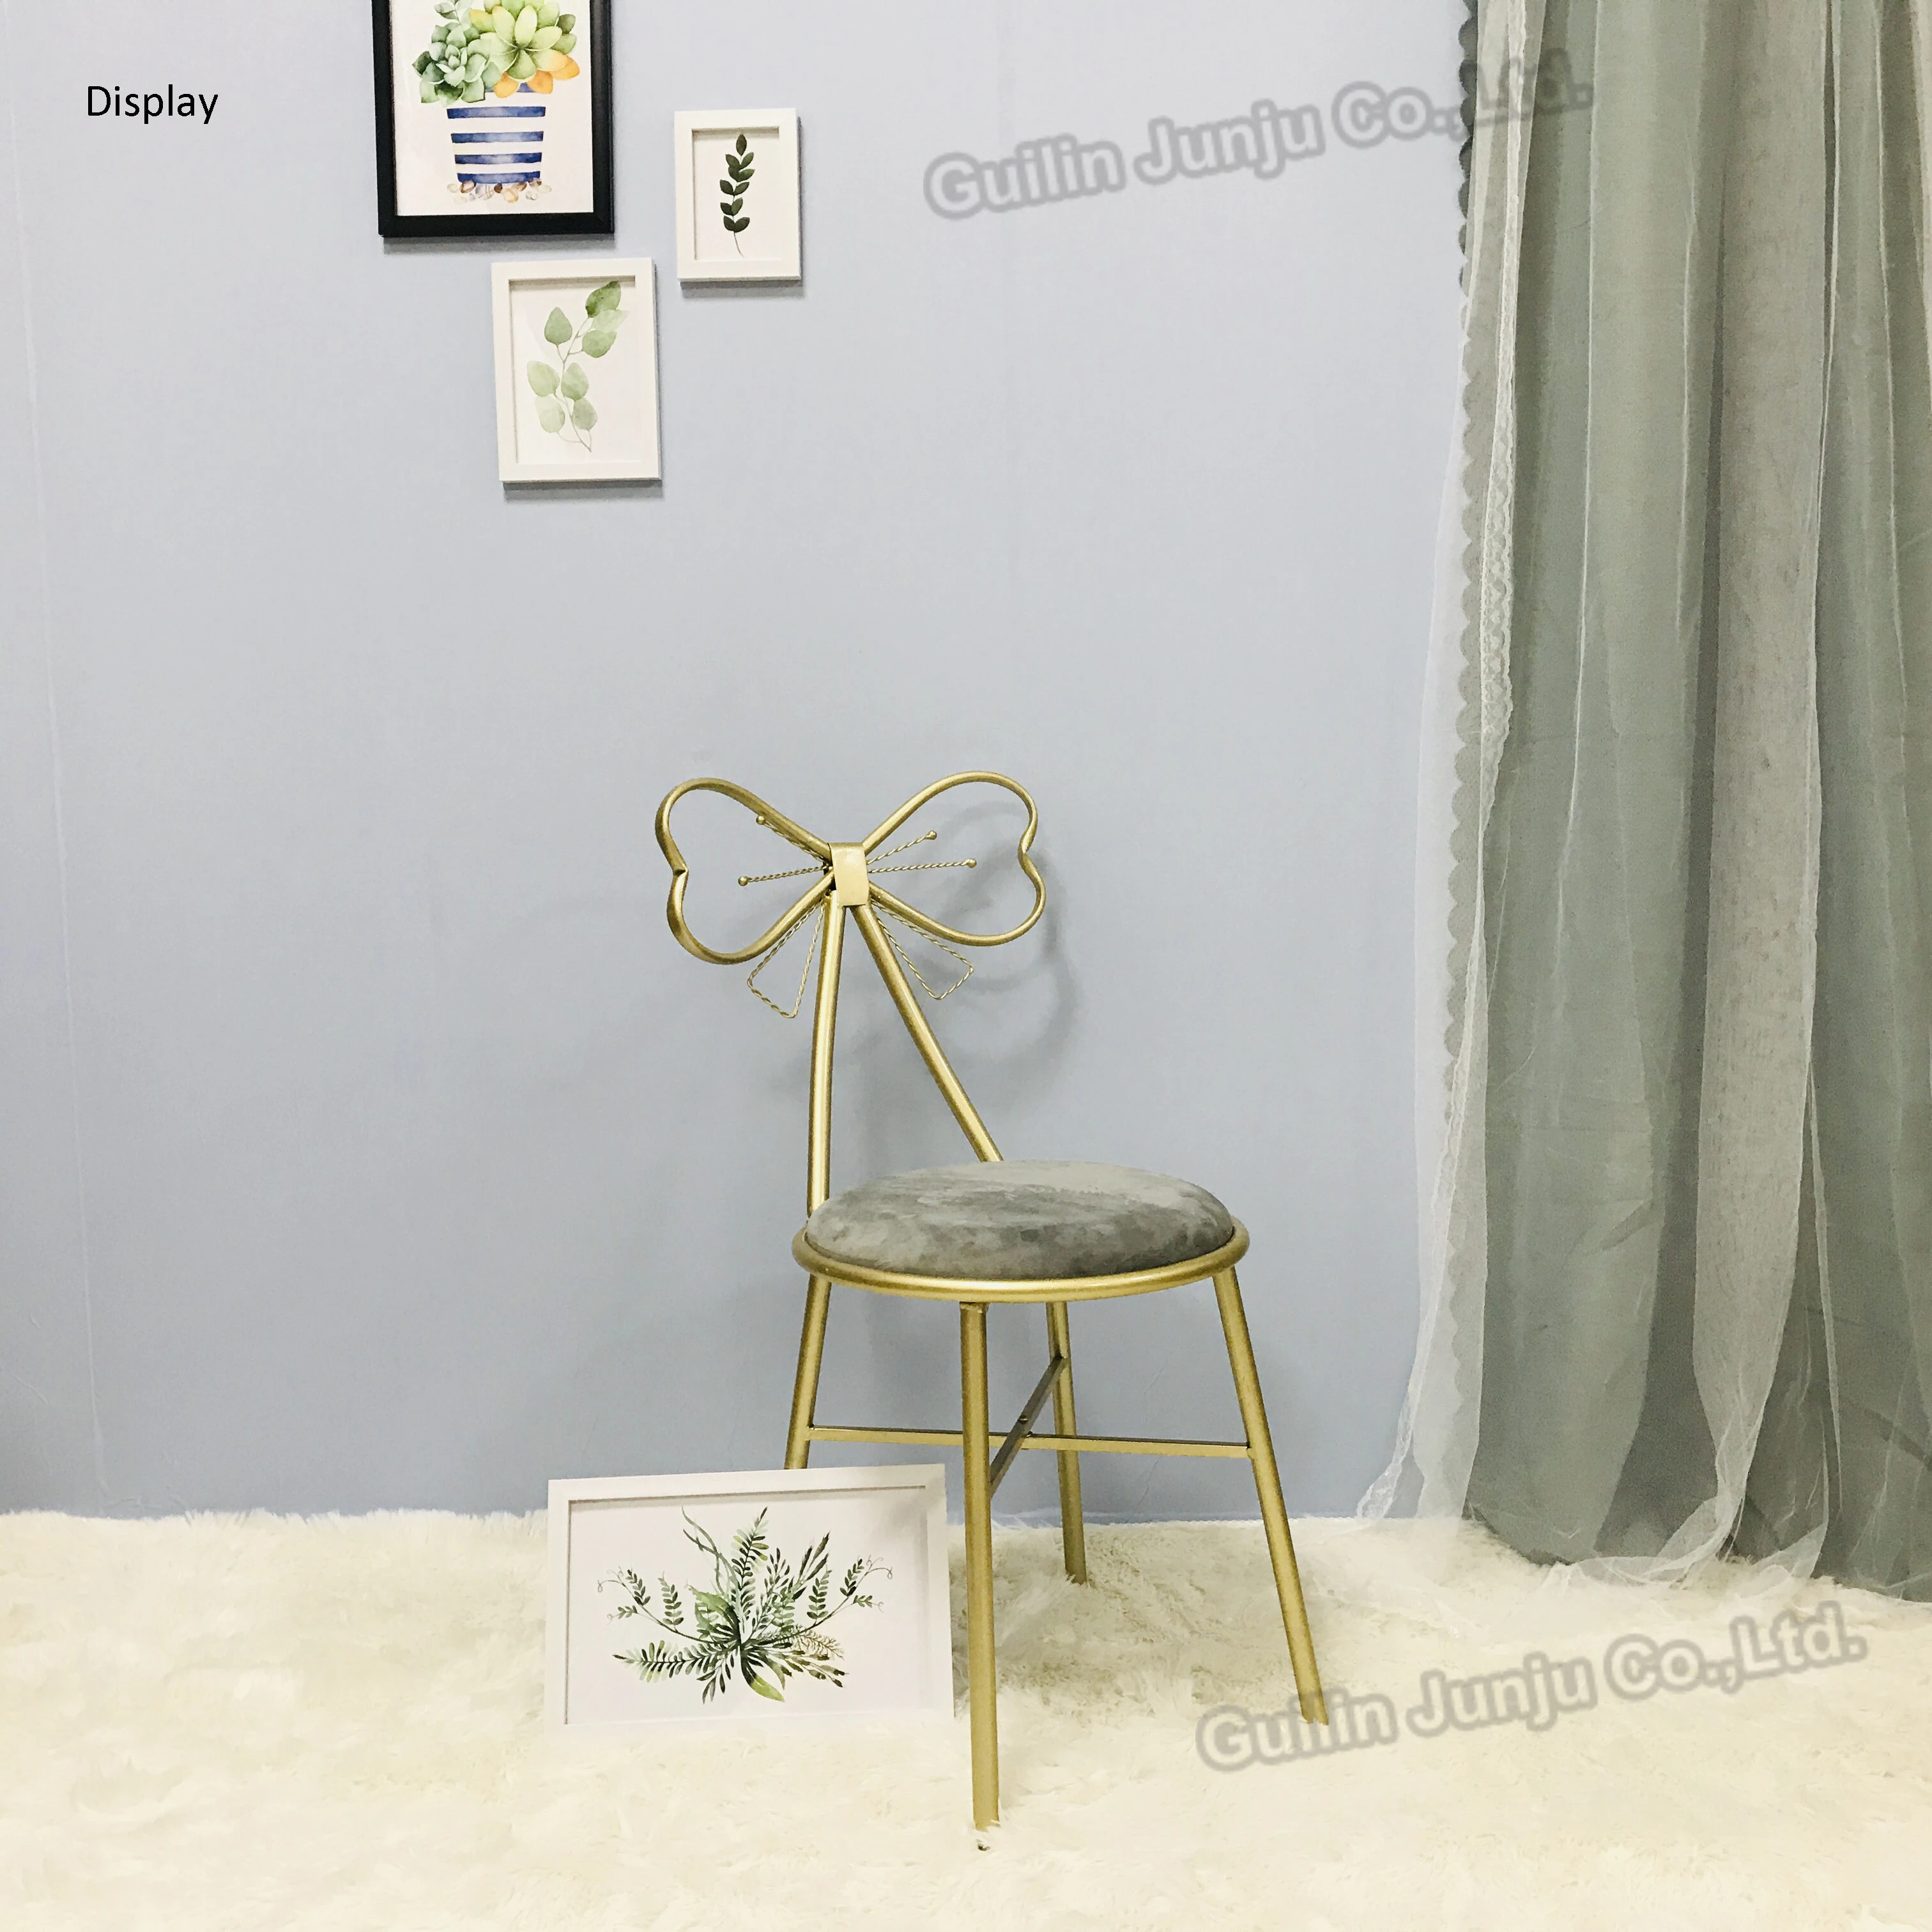 Junju Butterfly Chair Metal for Makeup Desk Bedroom Furniture